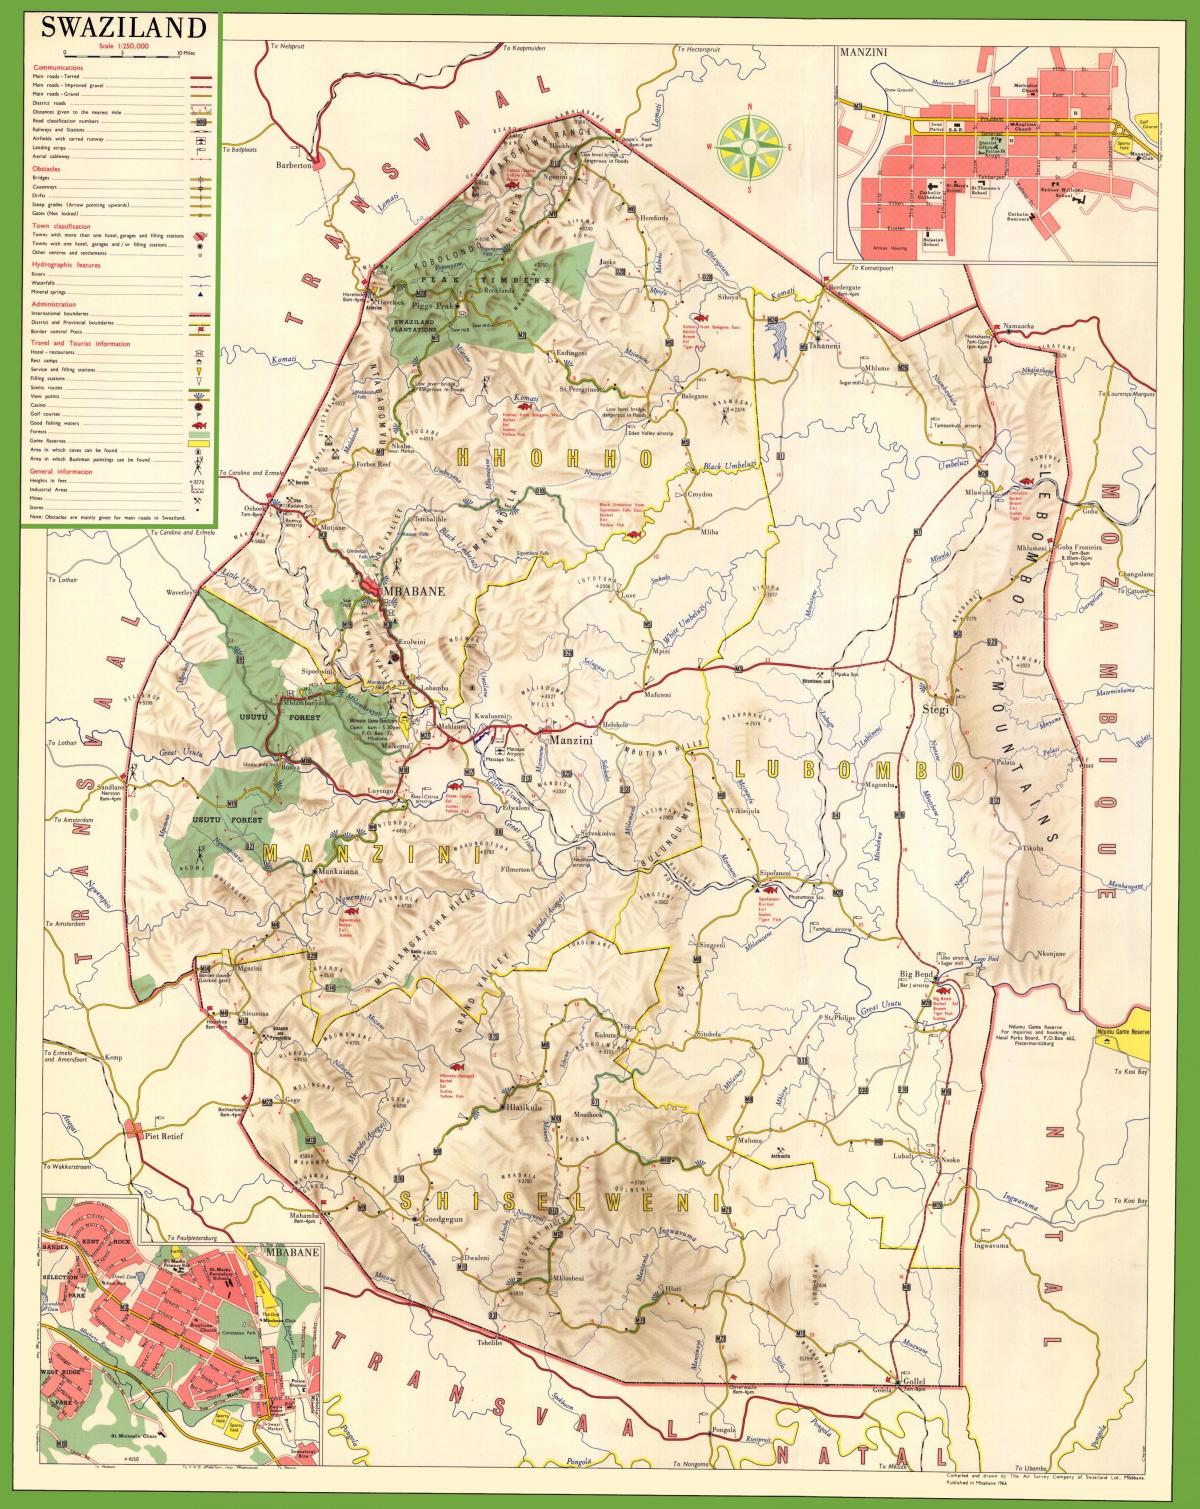 Kort Swaziland detaljeret